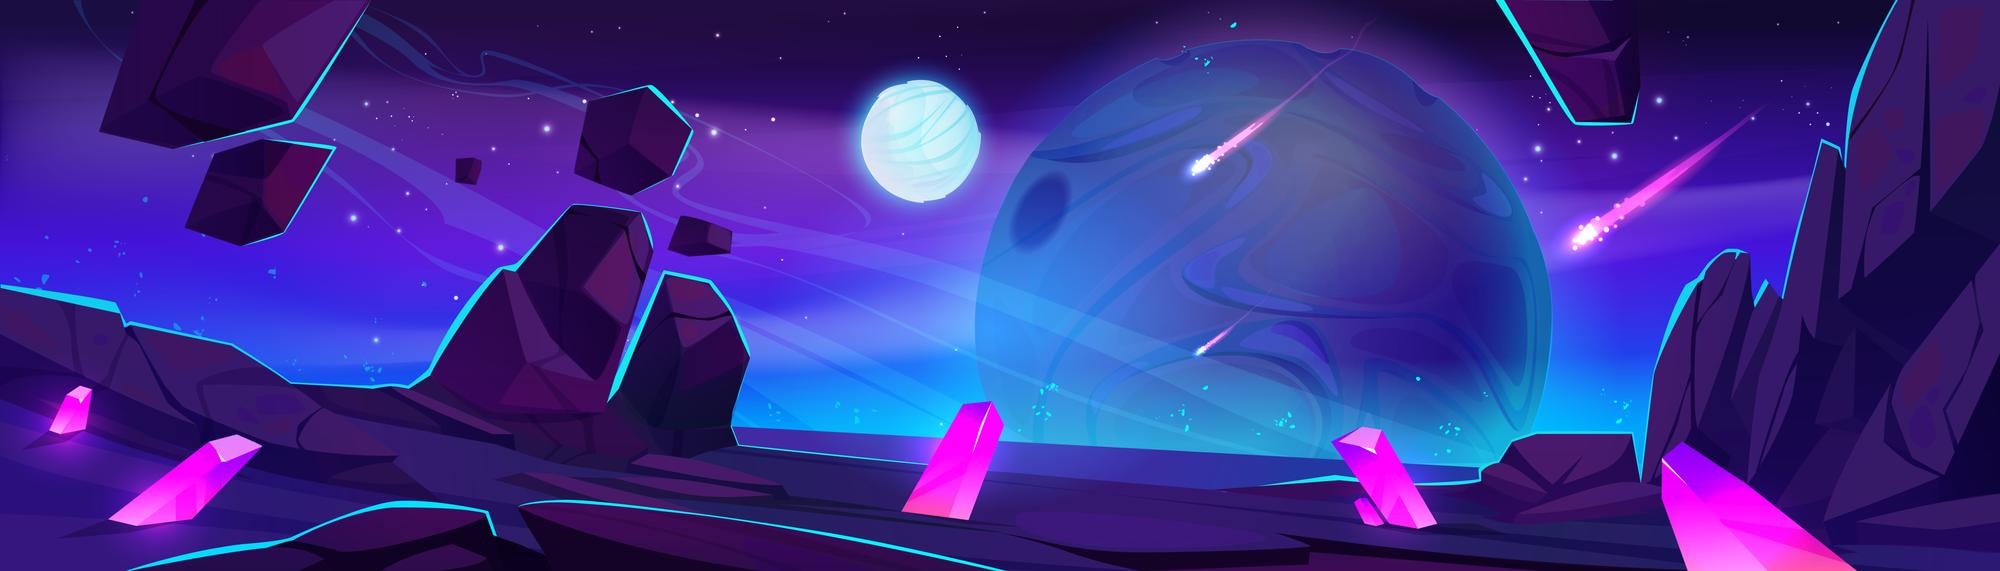 A cartoon style image of an alien planet - Steven Universe